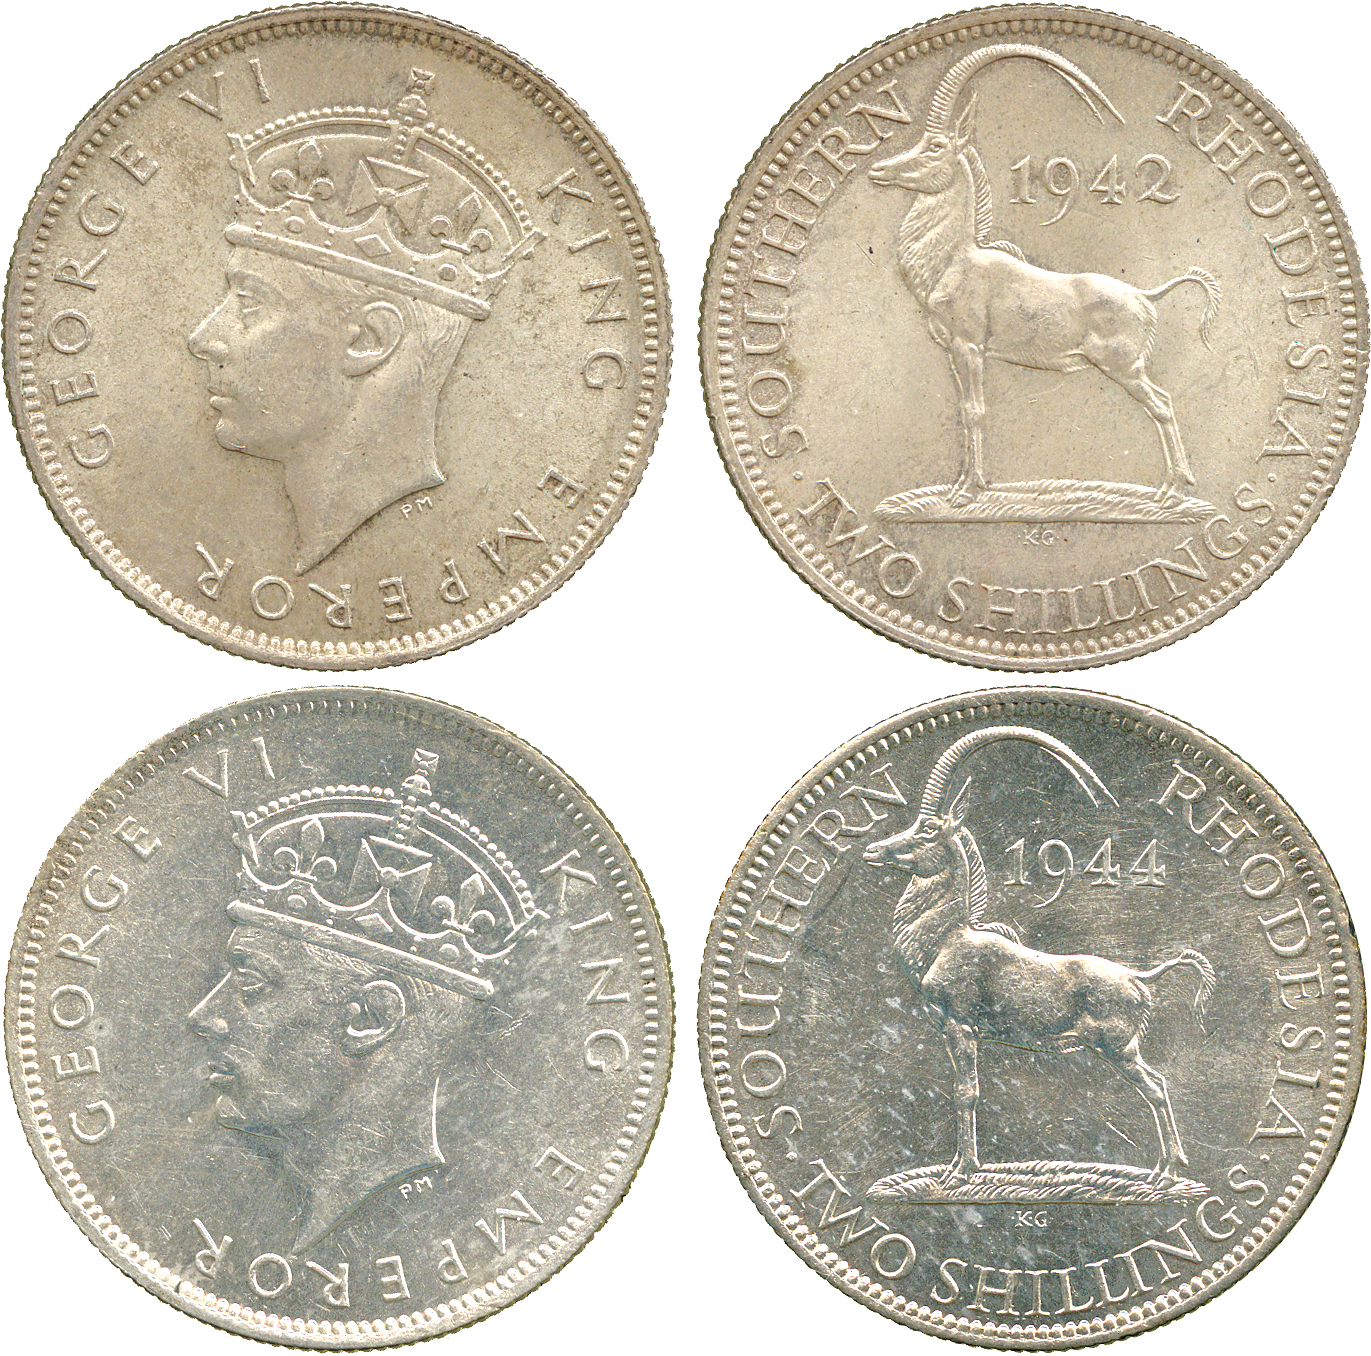 † AFRICA. Rhodesia. Southern Rhodesia. Silver 2-Shillings 1942, 1944 (KM 19, 19a). Both good